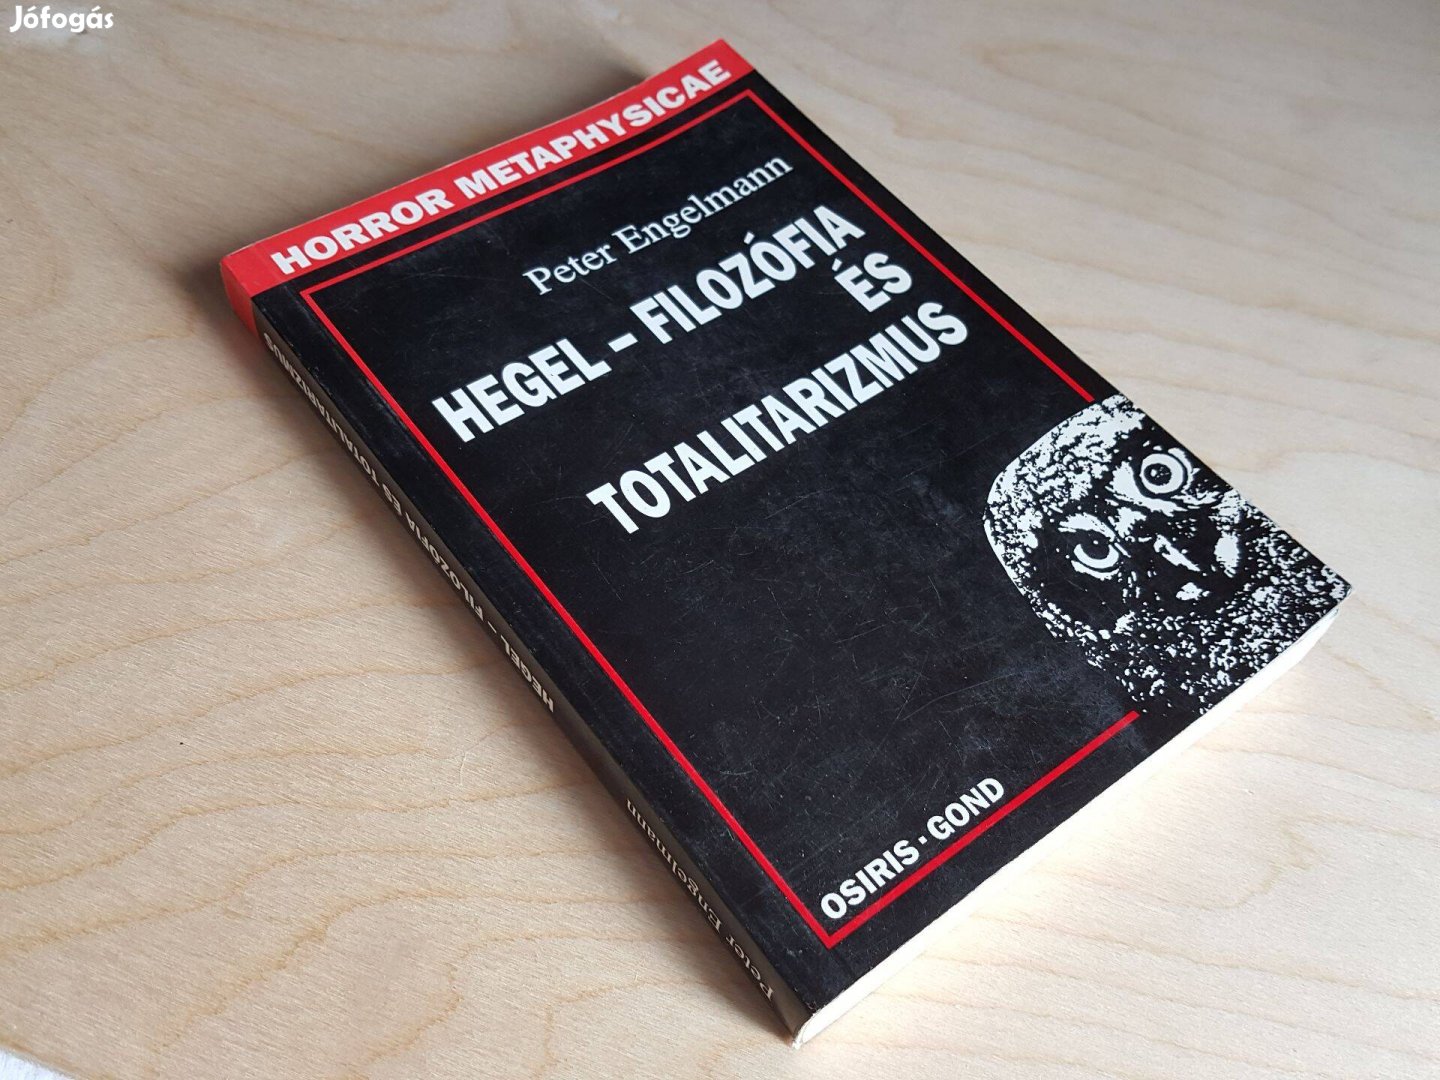 Peter Engelmann: Hegel Filozófia és totalitarizmus Horror Metaphysicae